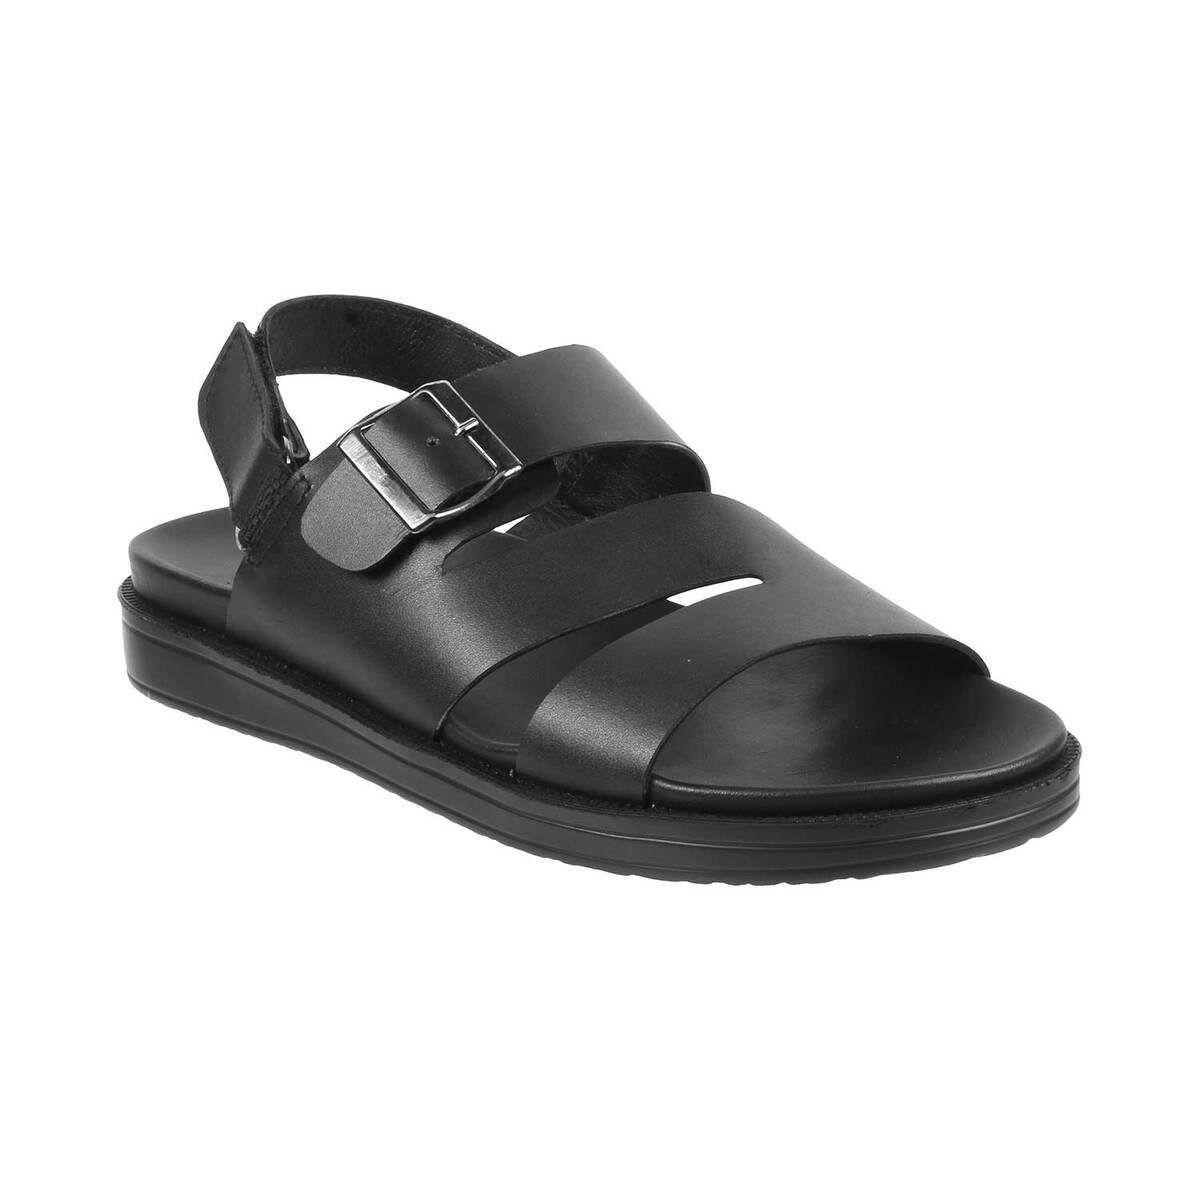 Buy Men Tan Casual Sandals Online | SKU: 80-5438-23-10-Metro Shoes-sgquangbinhtourist.com.vn